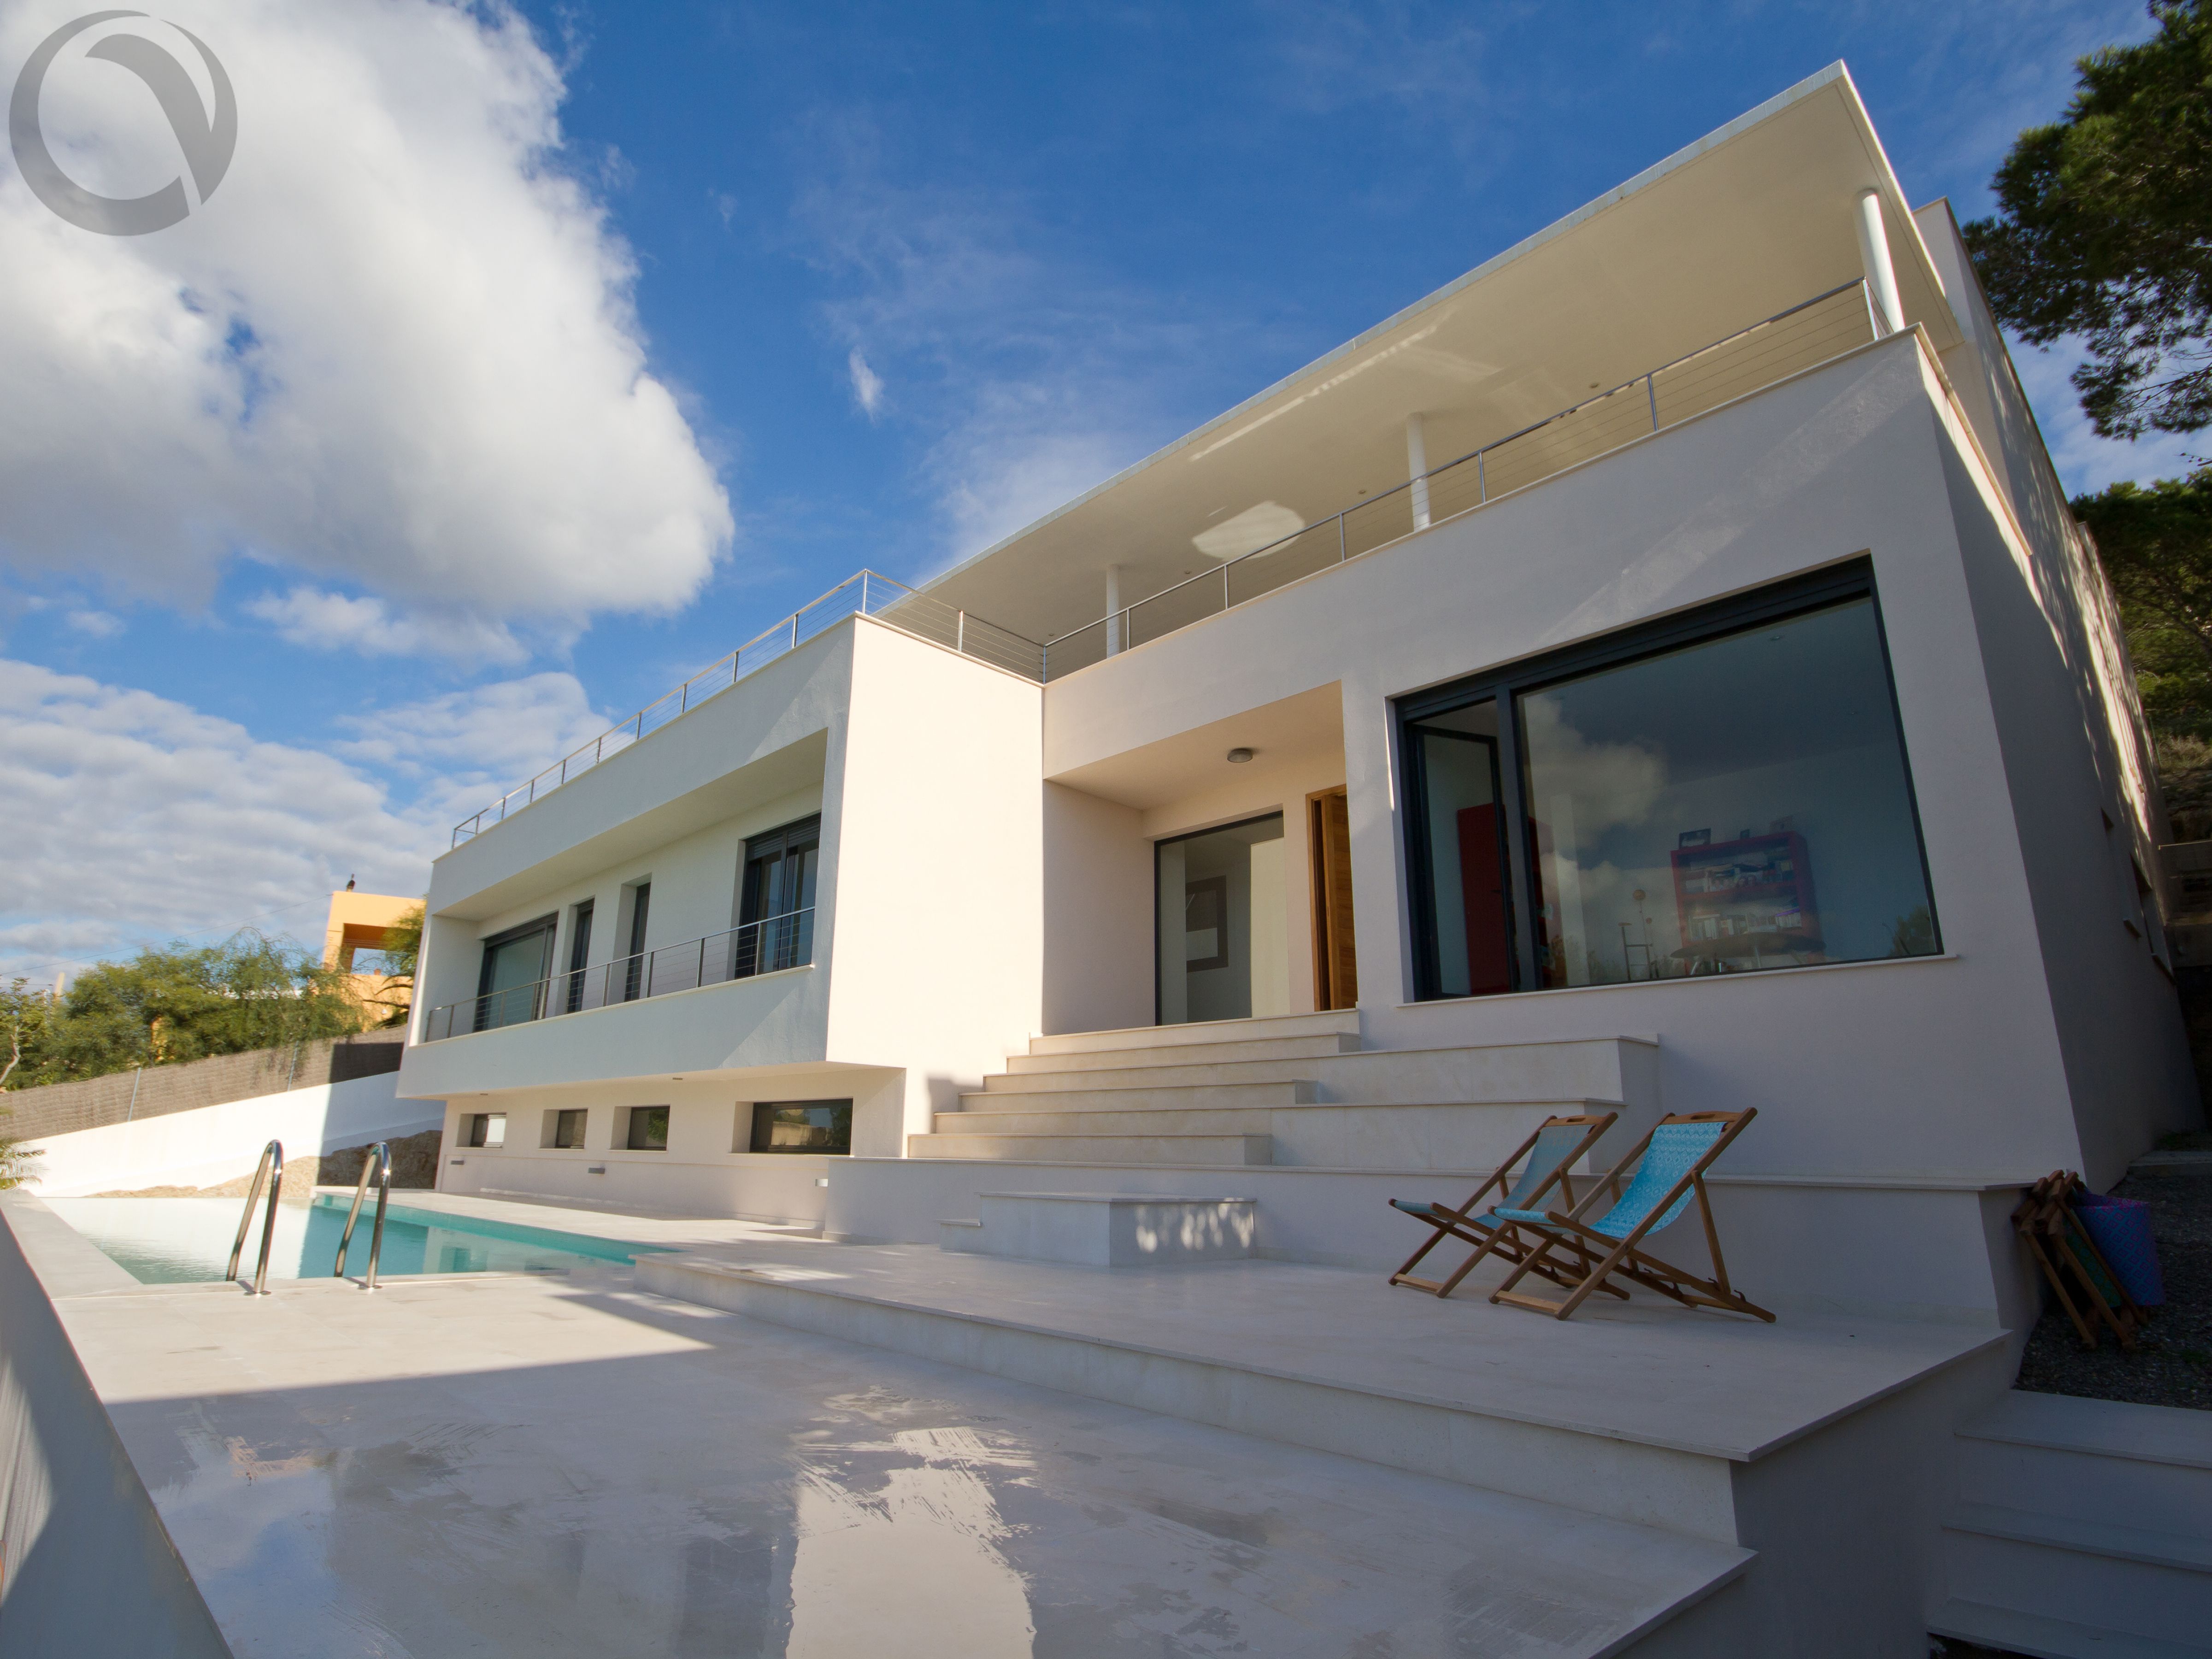 Villa Emma. 4 bedrooms villa in Ibiza for rent